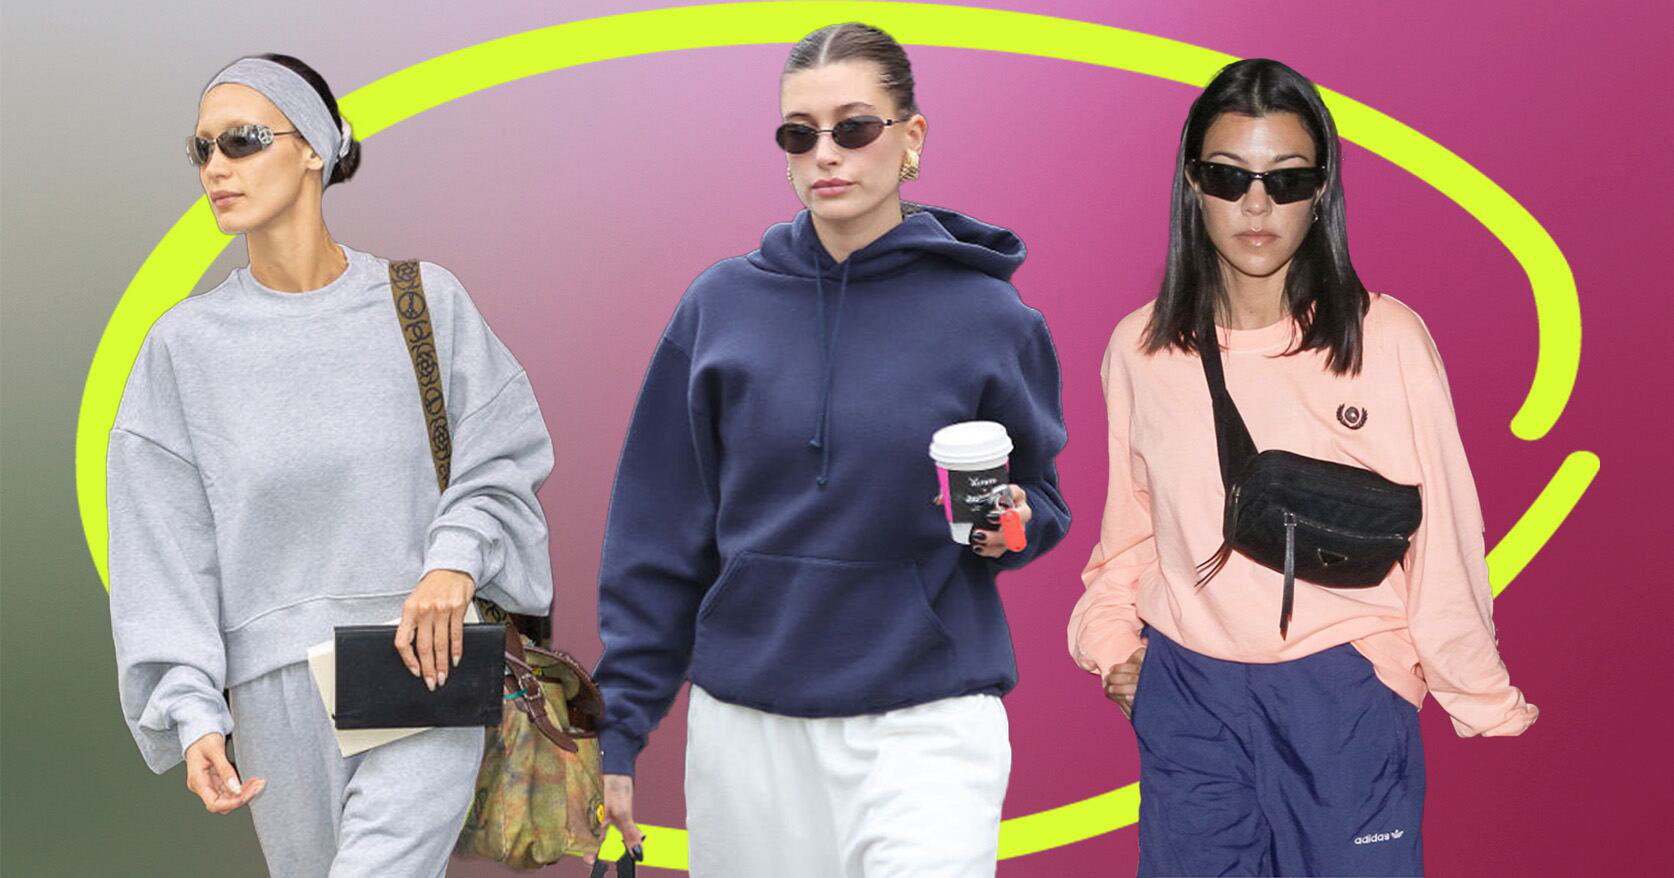 The 6 best women’s hoodies and sweatshirts to buy this season